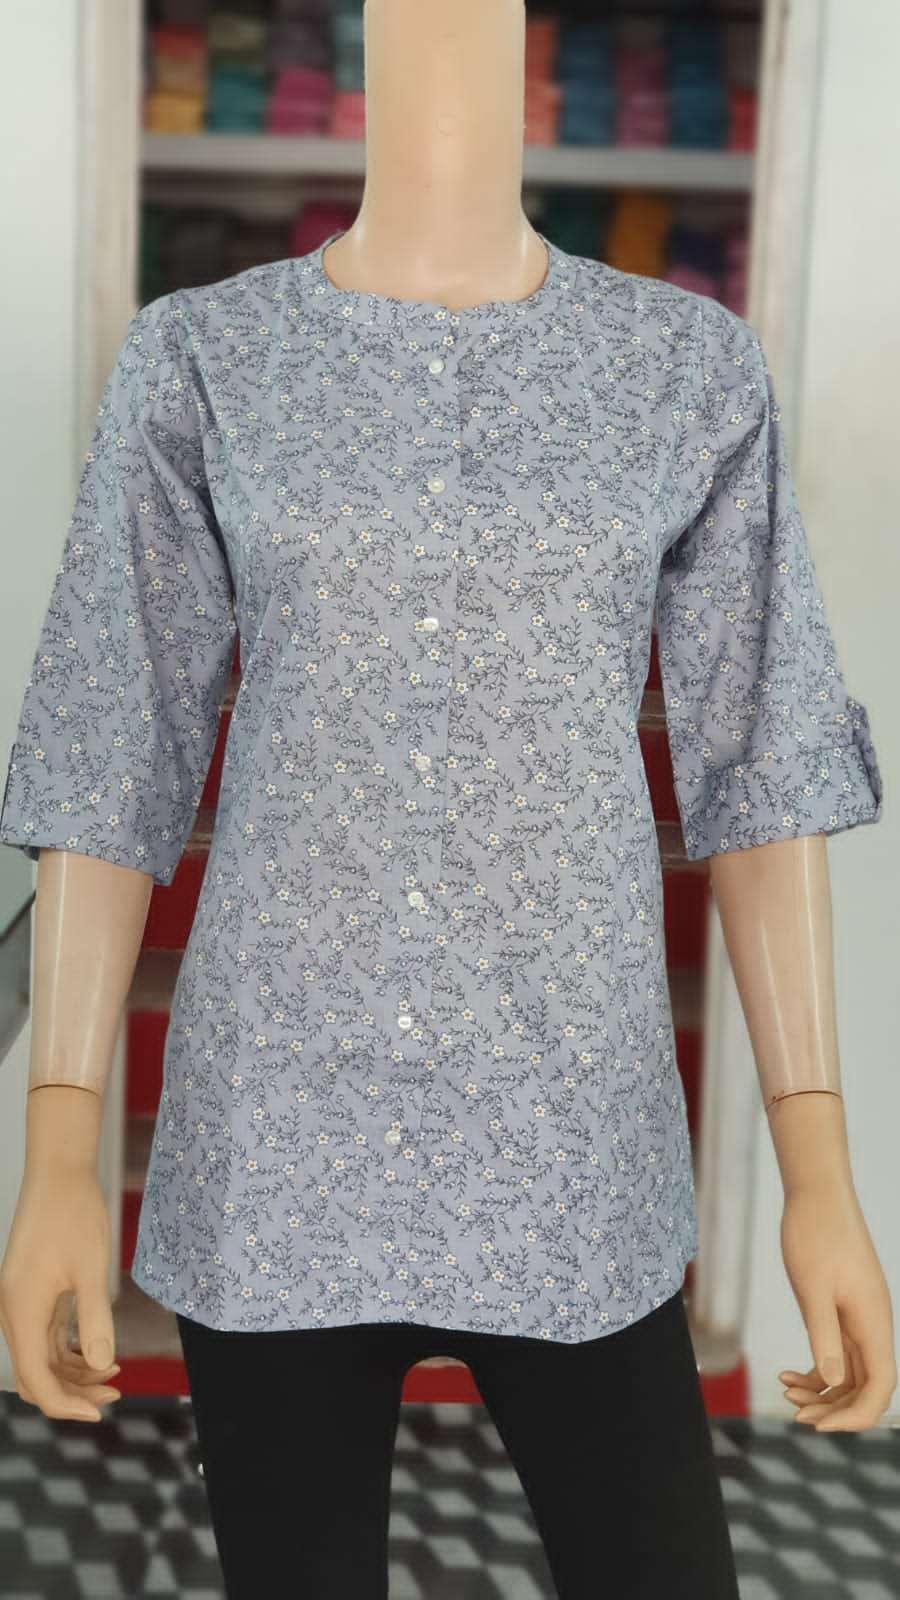 pratham fashion cotton vol-2 cotton printed designer tunic top manufacturer surat